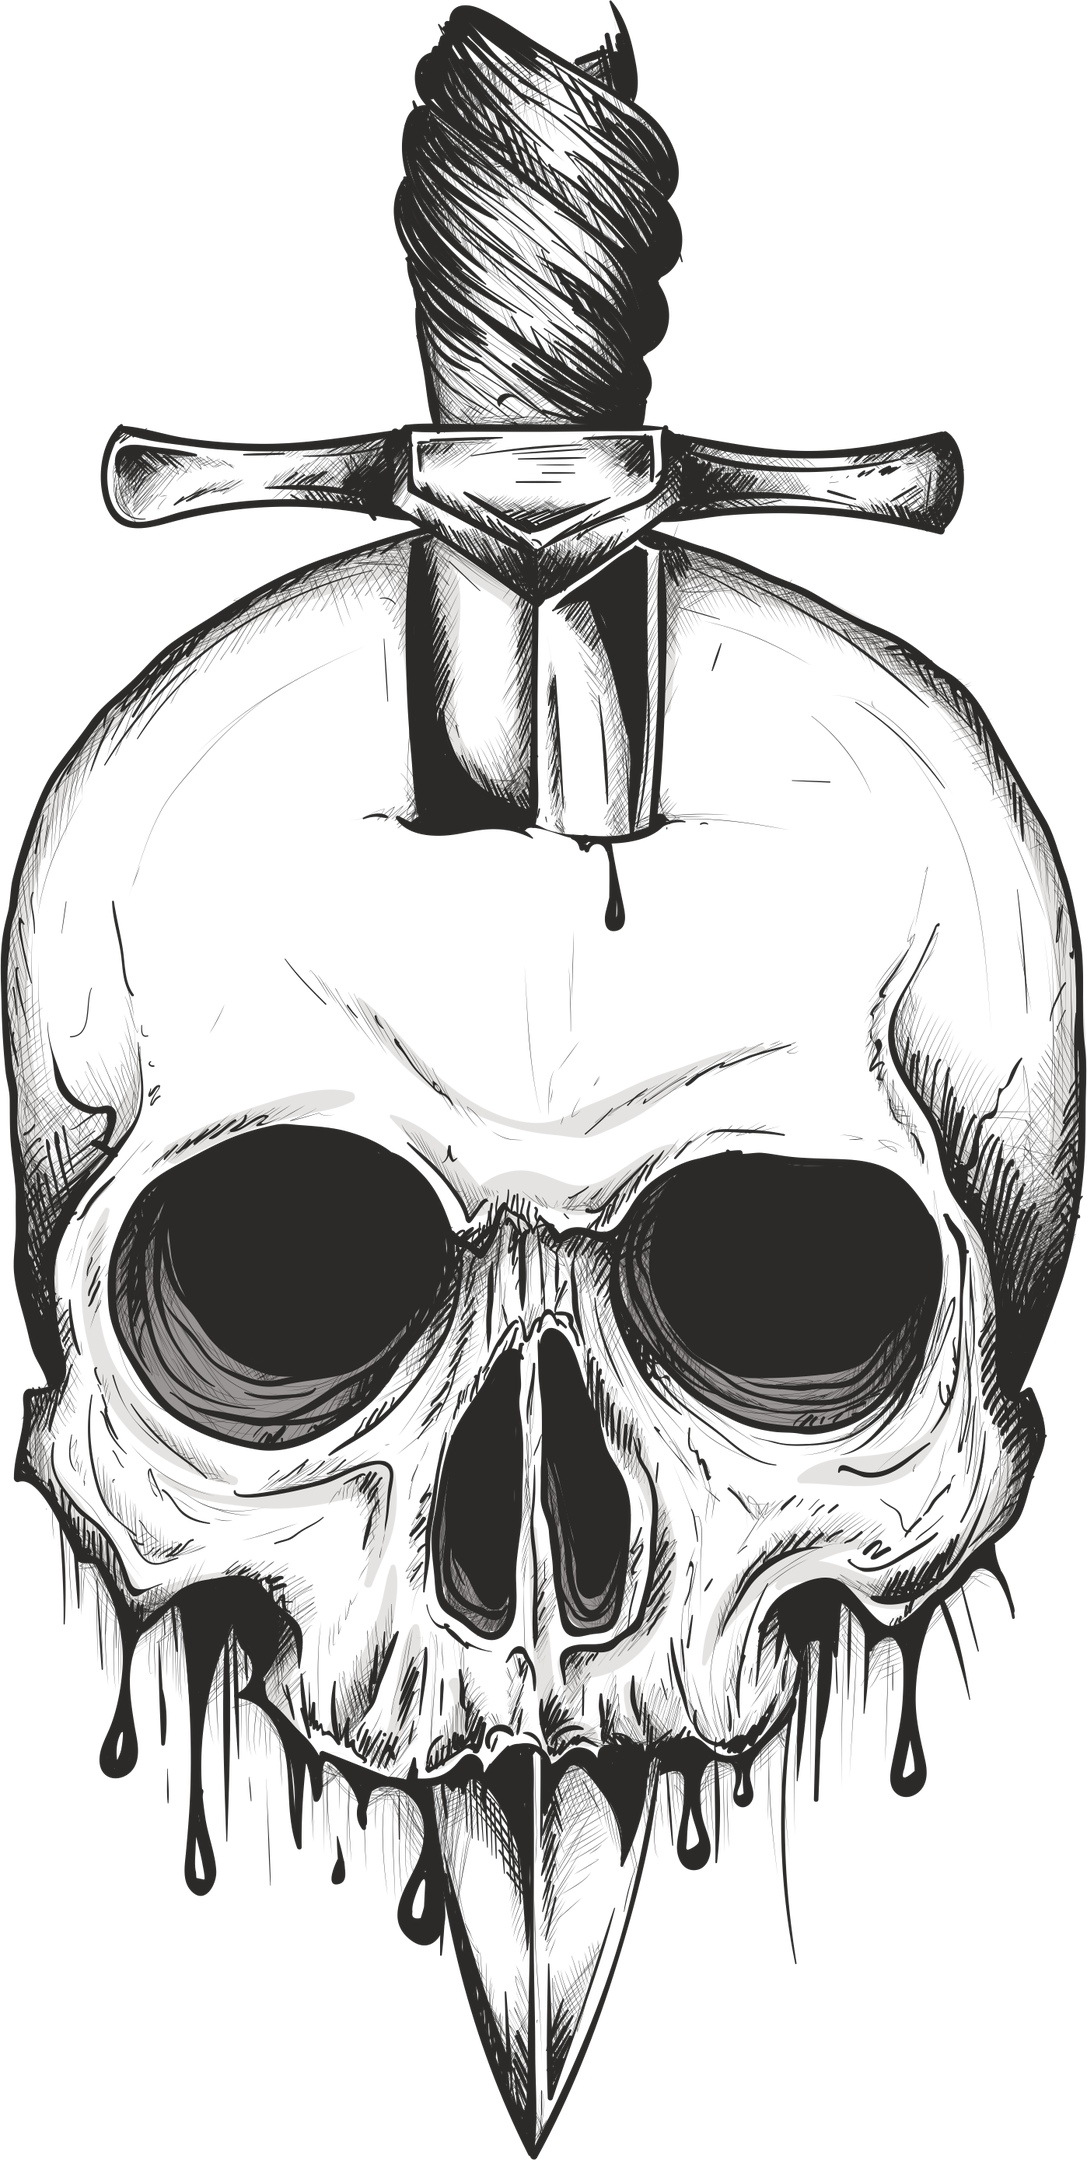 Sword Skull Print Free Vector cdr Download - 3axis.co